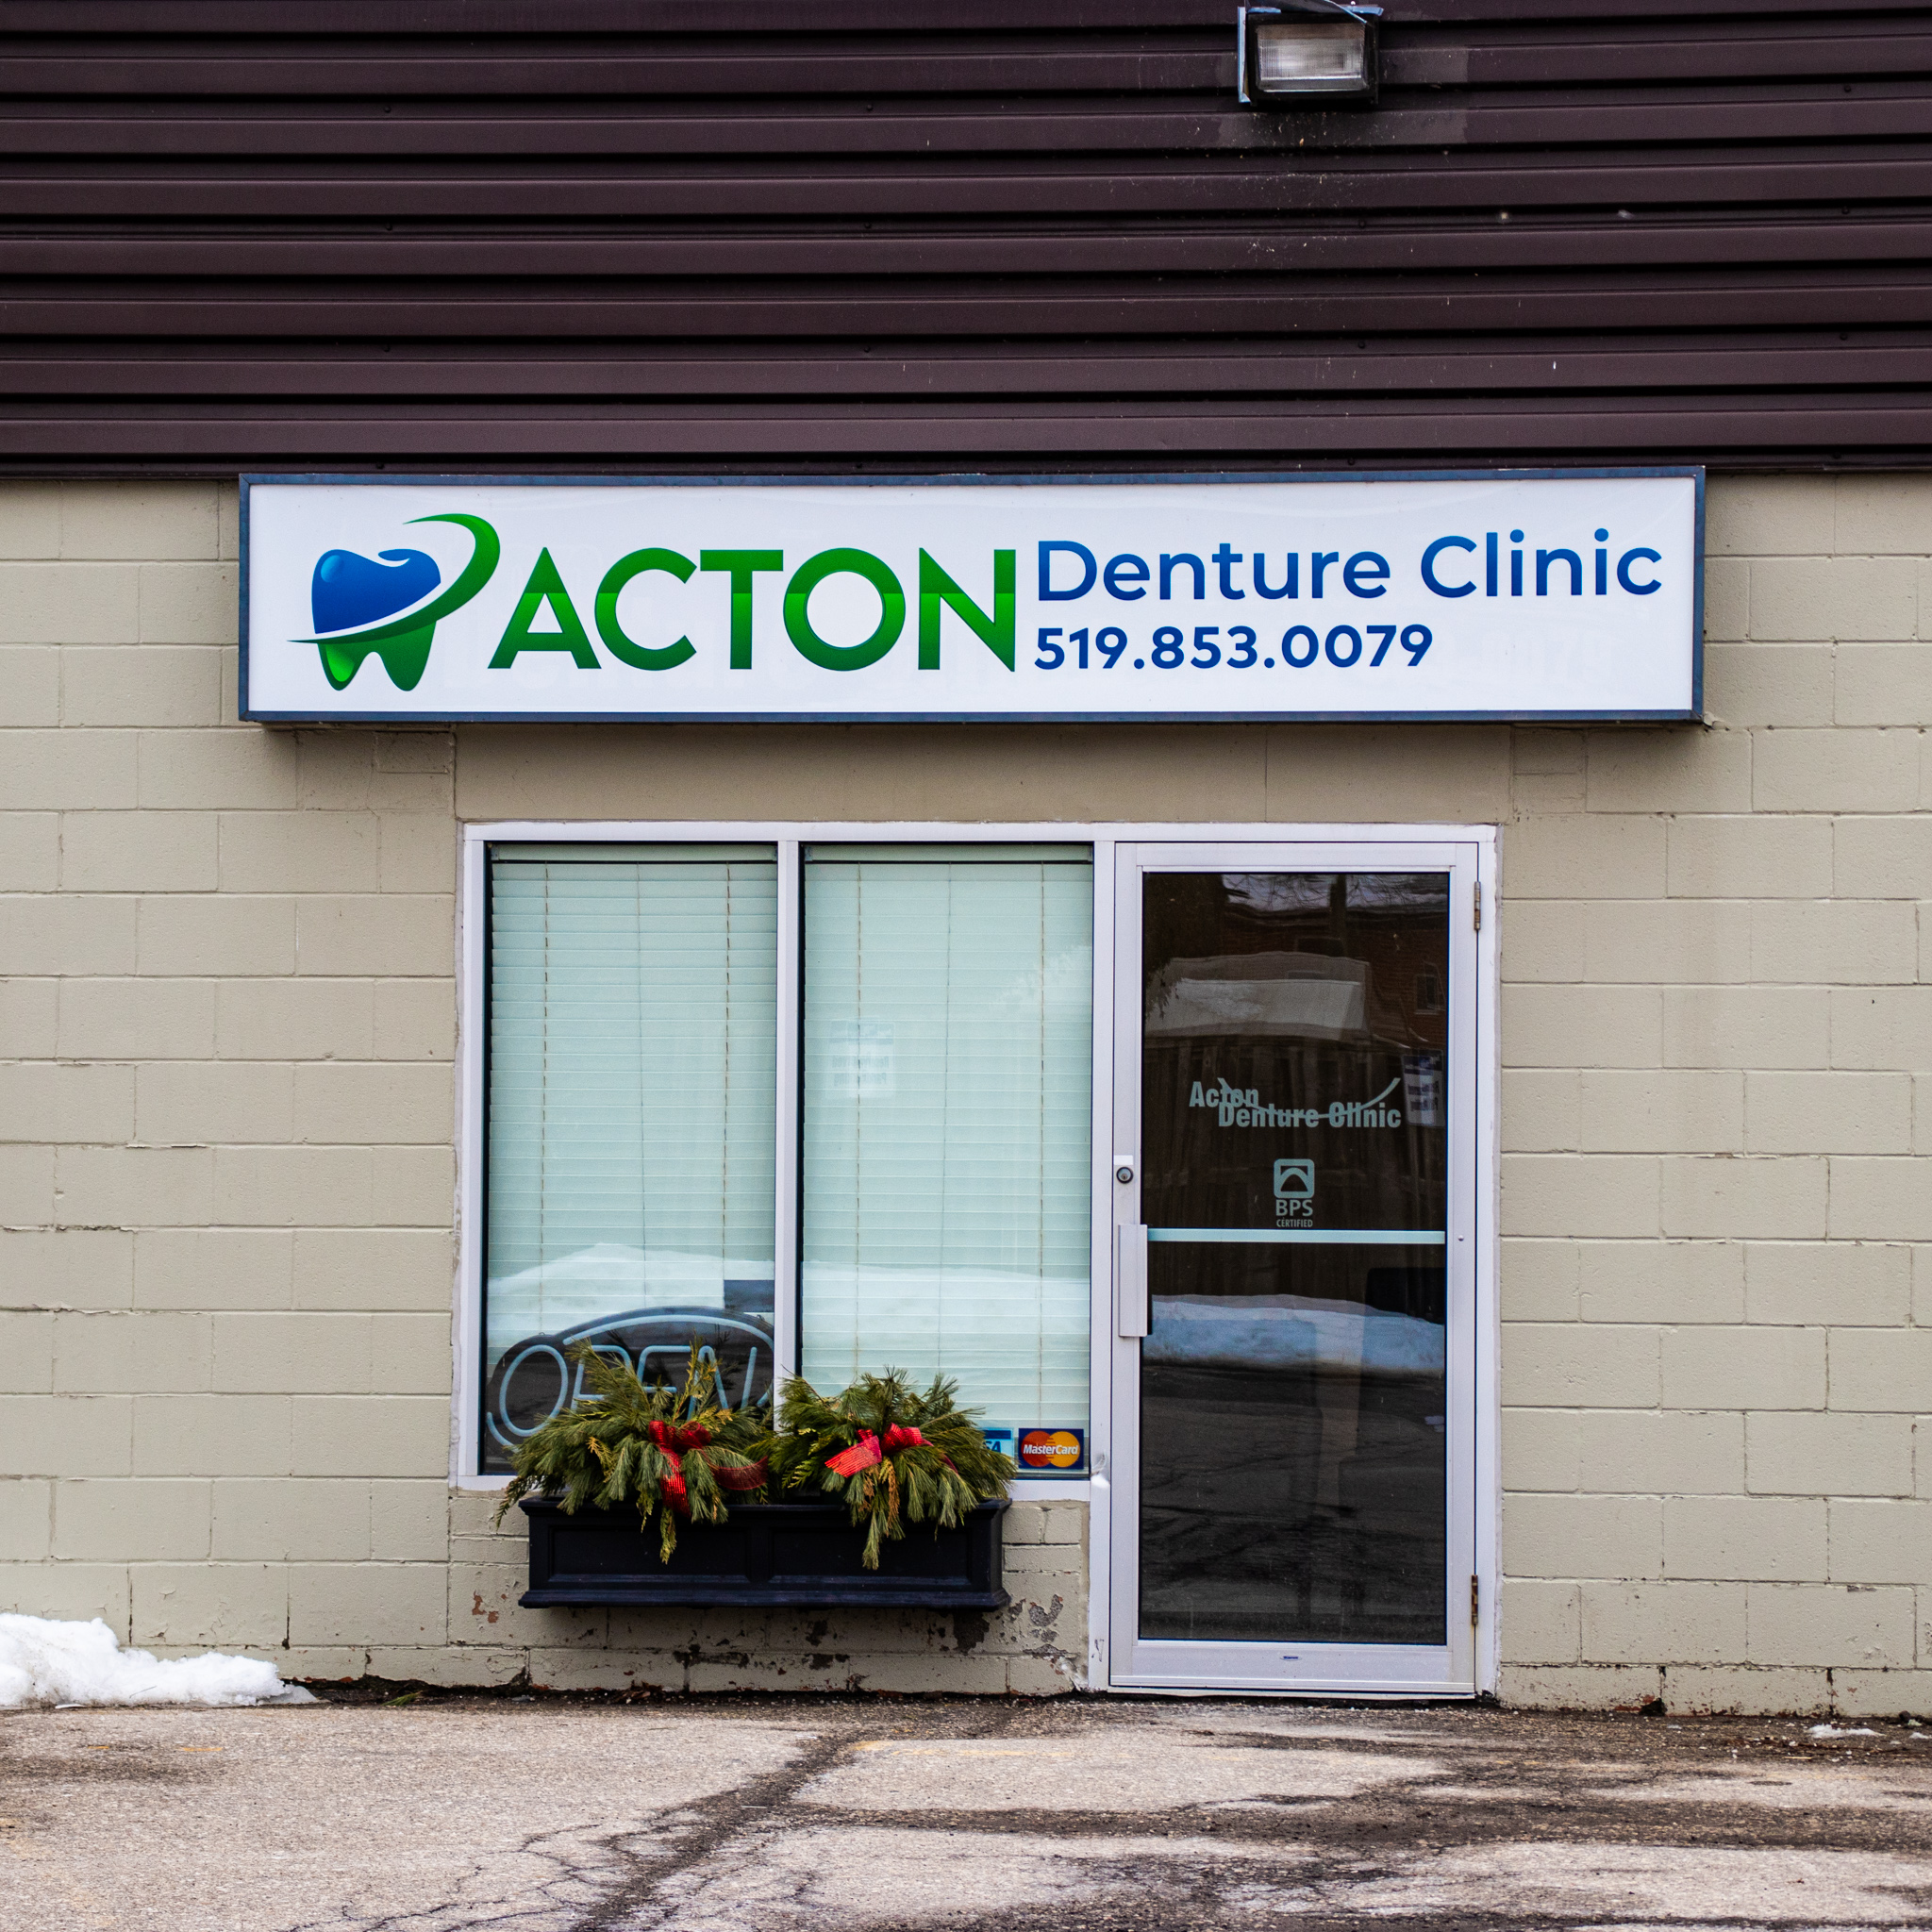 Acton Denture Clinic